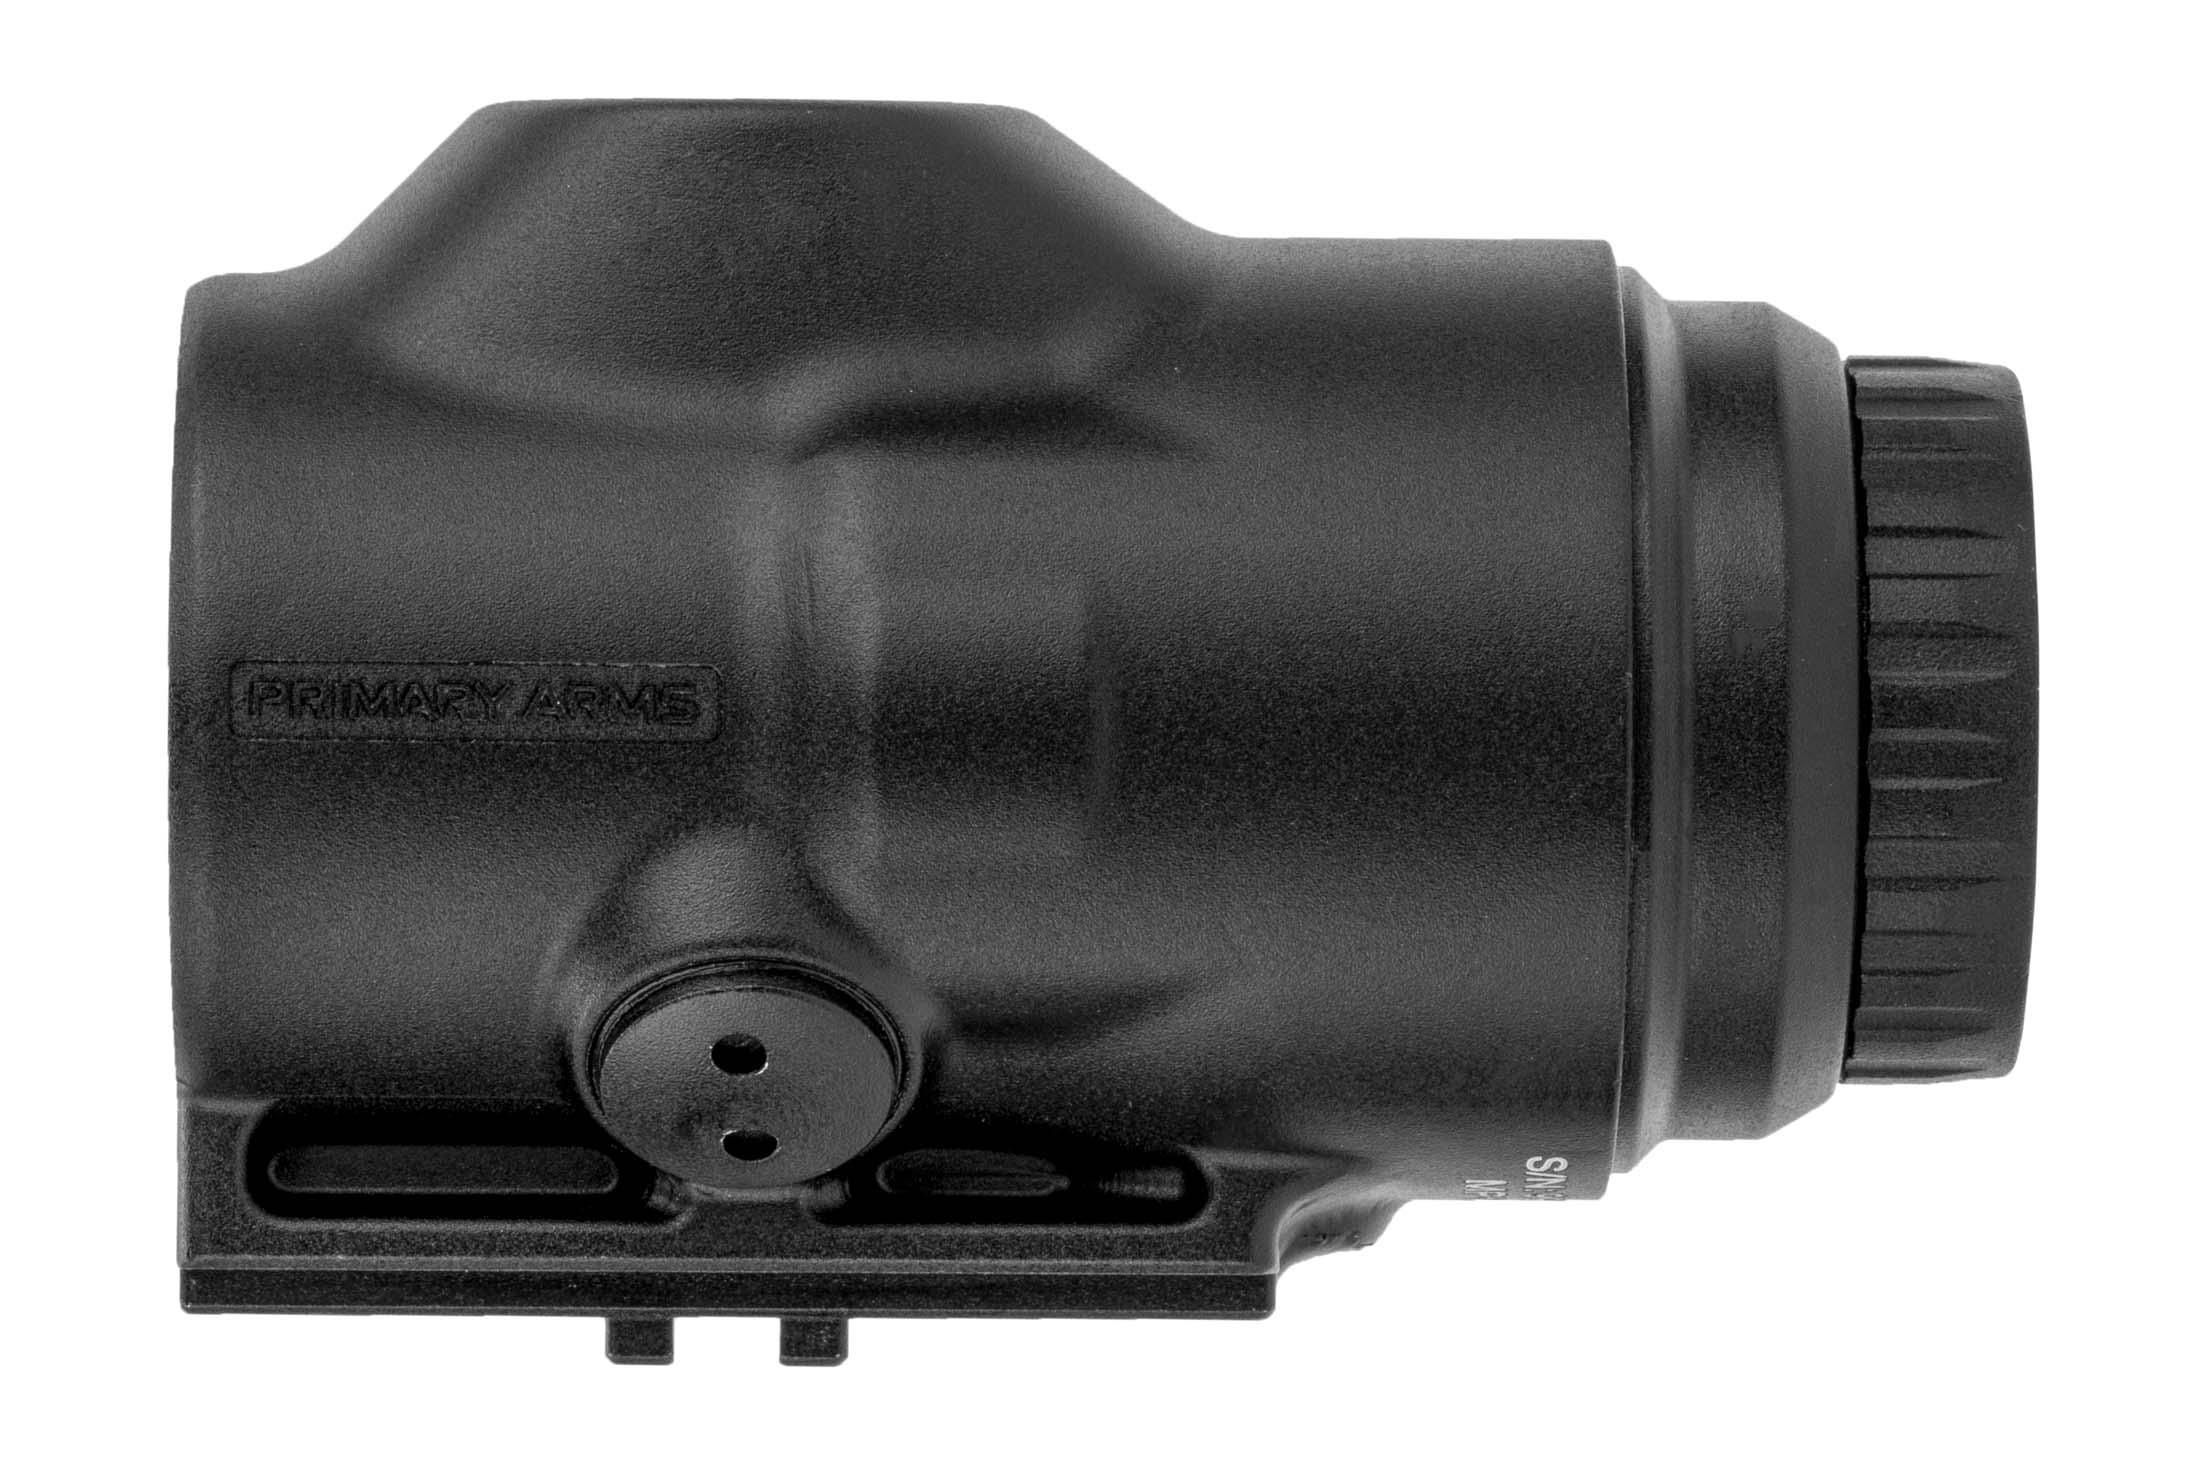 Primary Arms SLx 3X Micro Magnifier